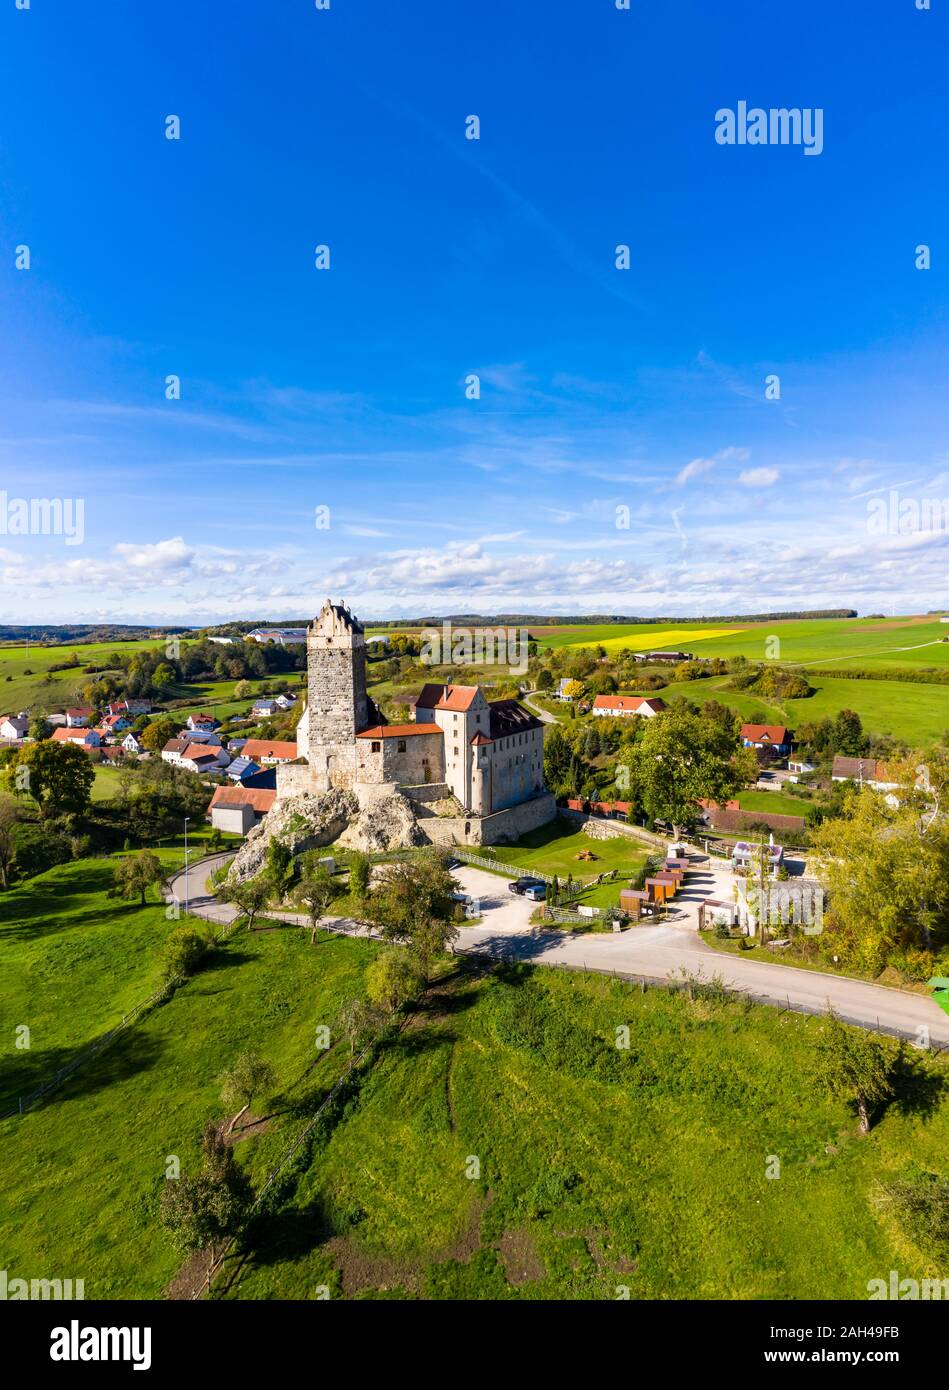 Germany, Baden-Wurttemberg, Dischingen, Katzenstein Castle and surrounding village houses Stock Photo